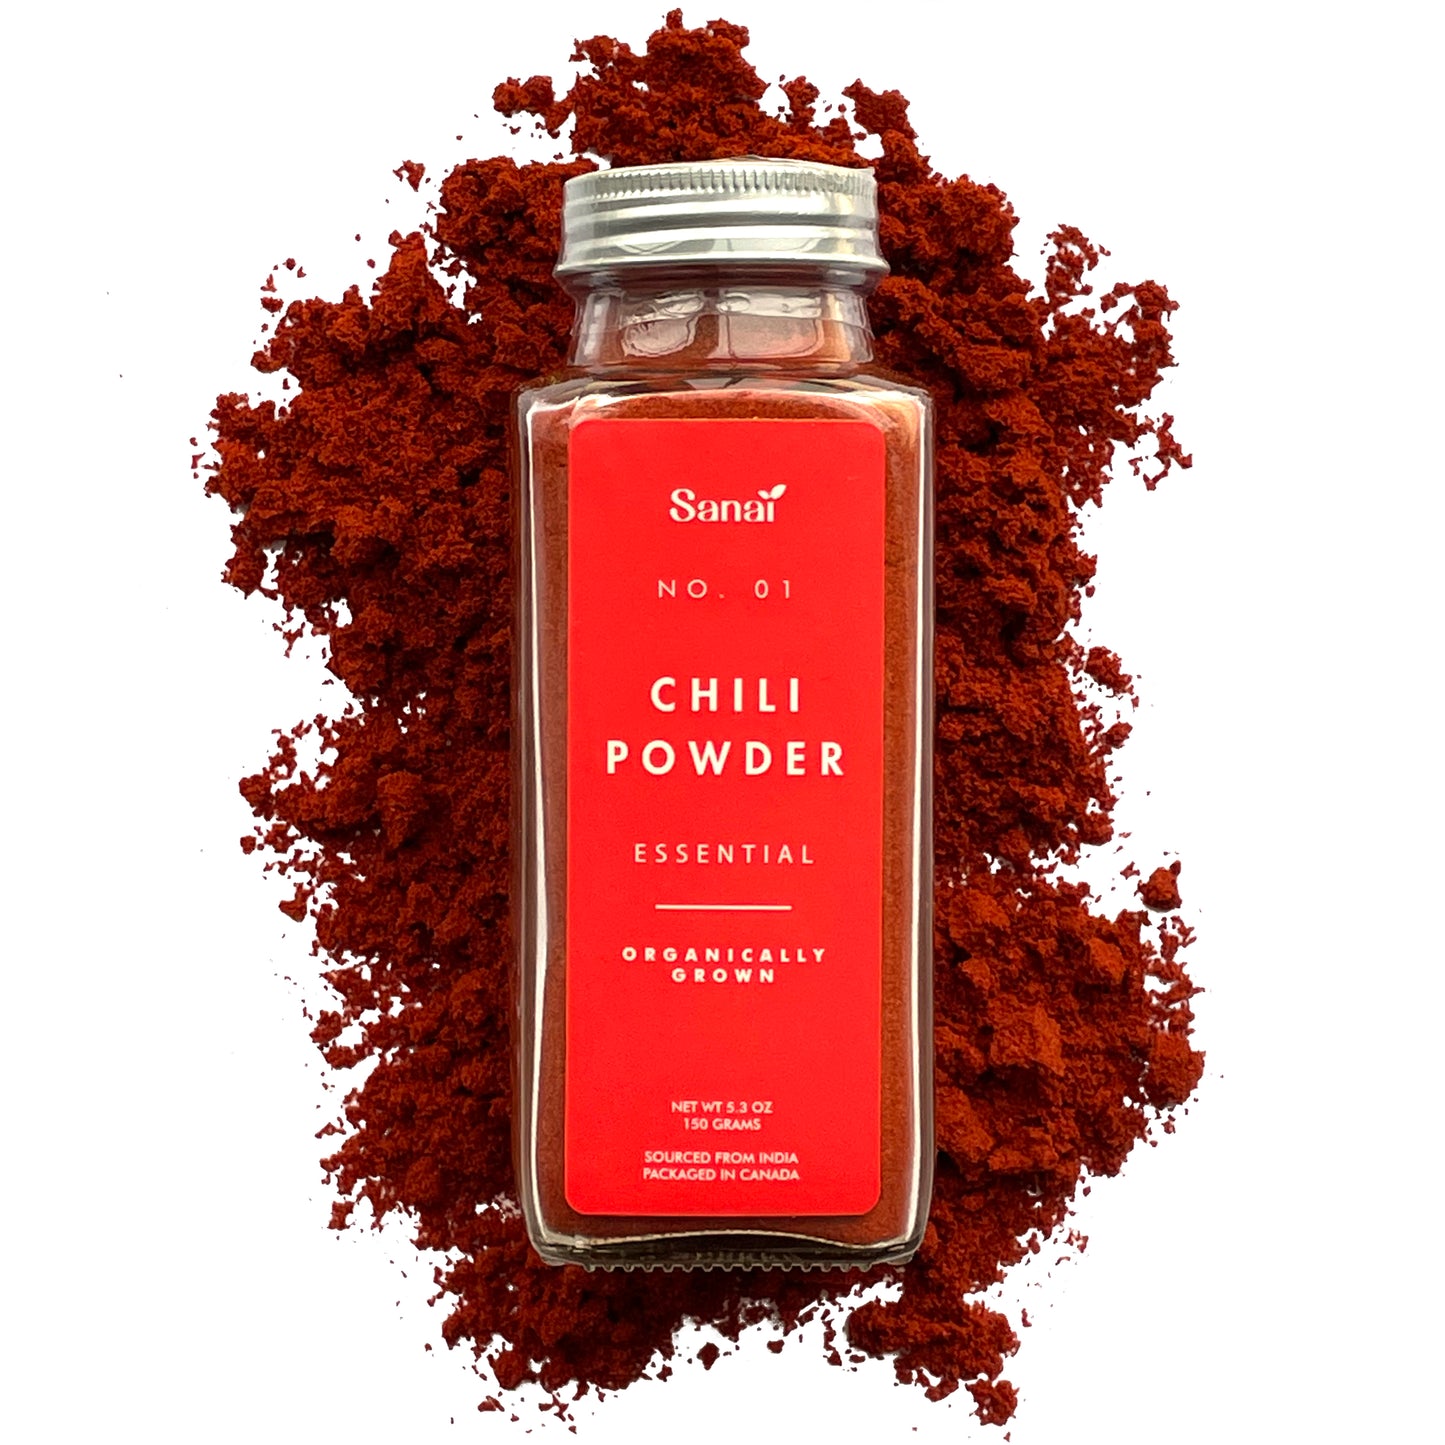 Sanai chili powder